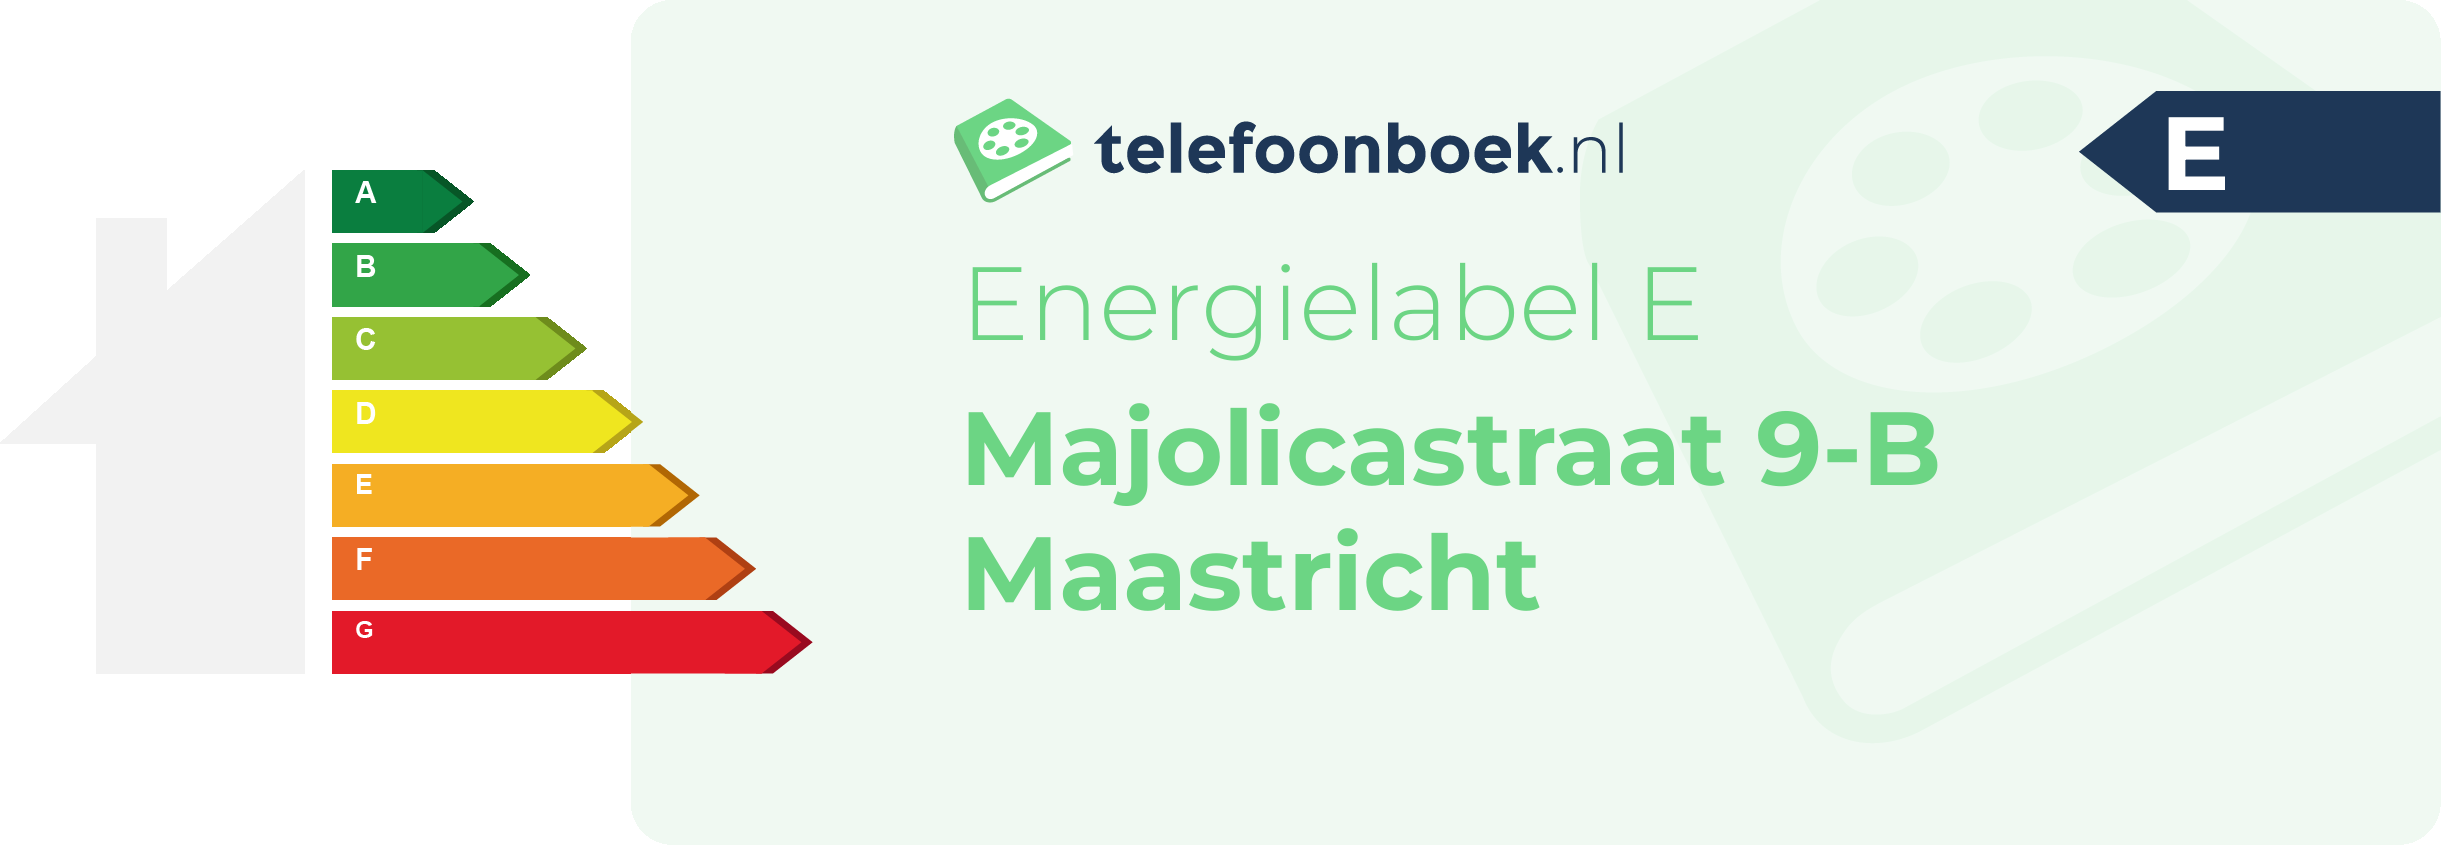 Energielabel Majolicastraat 9-B Maastricht